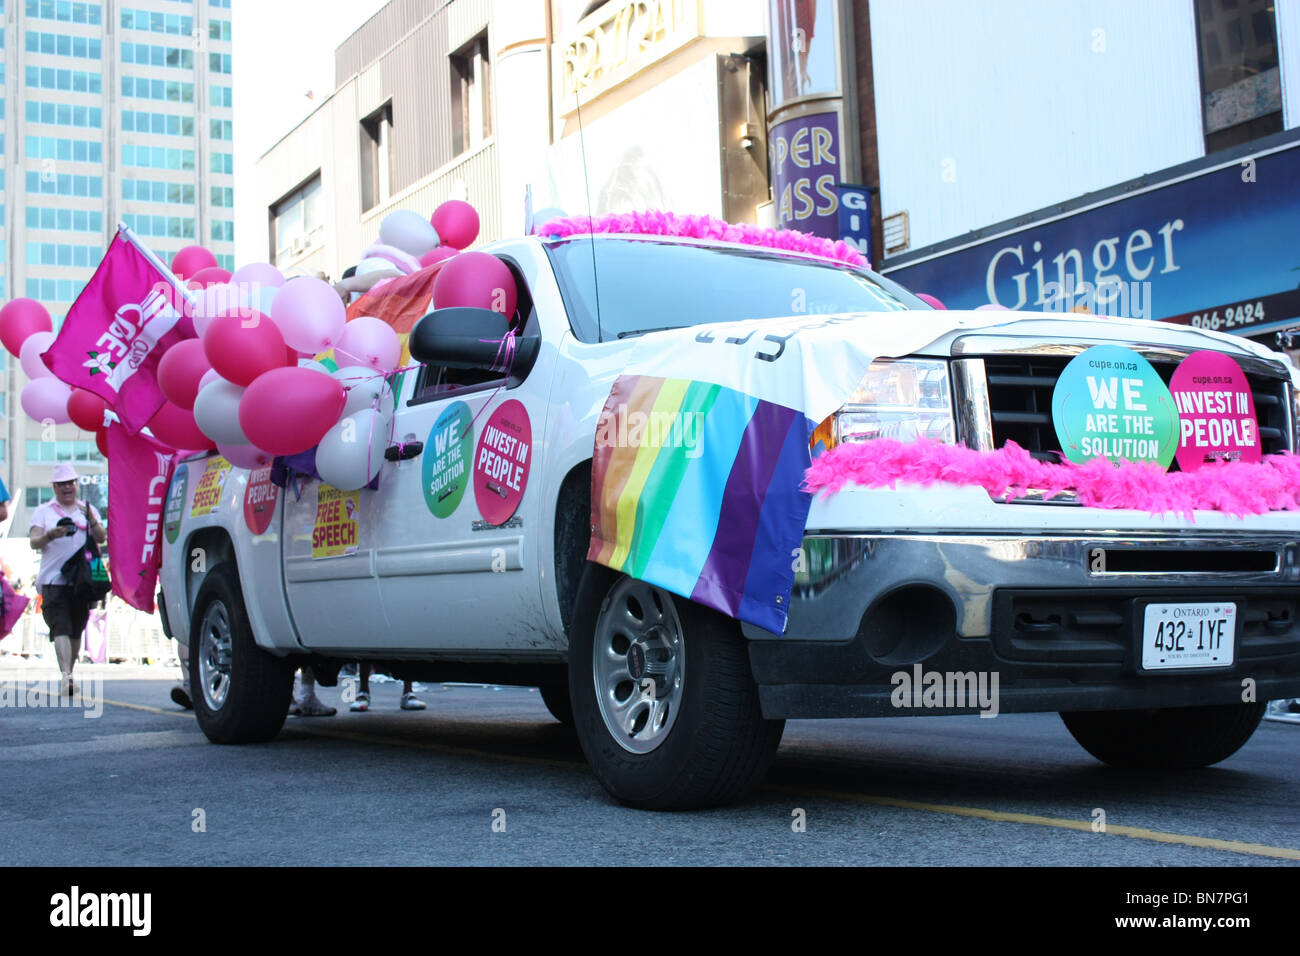 https://c8.alamy.com/comp/BN7PG1/toronto-pride-parade-car-pink-balloon-BN7PG1.jpg